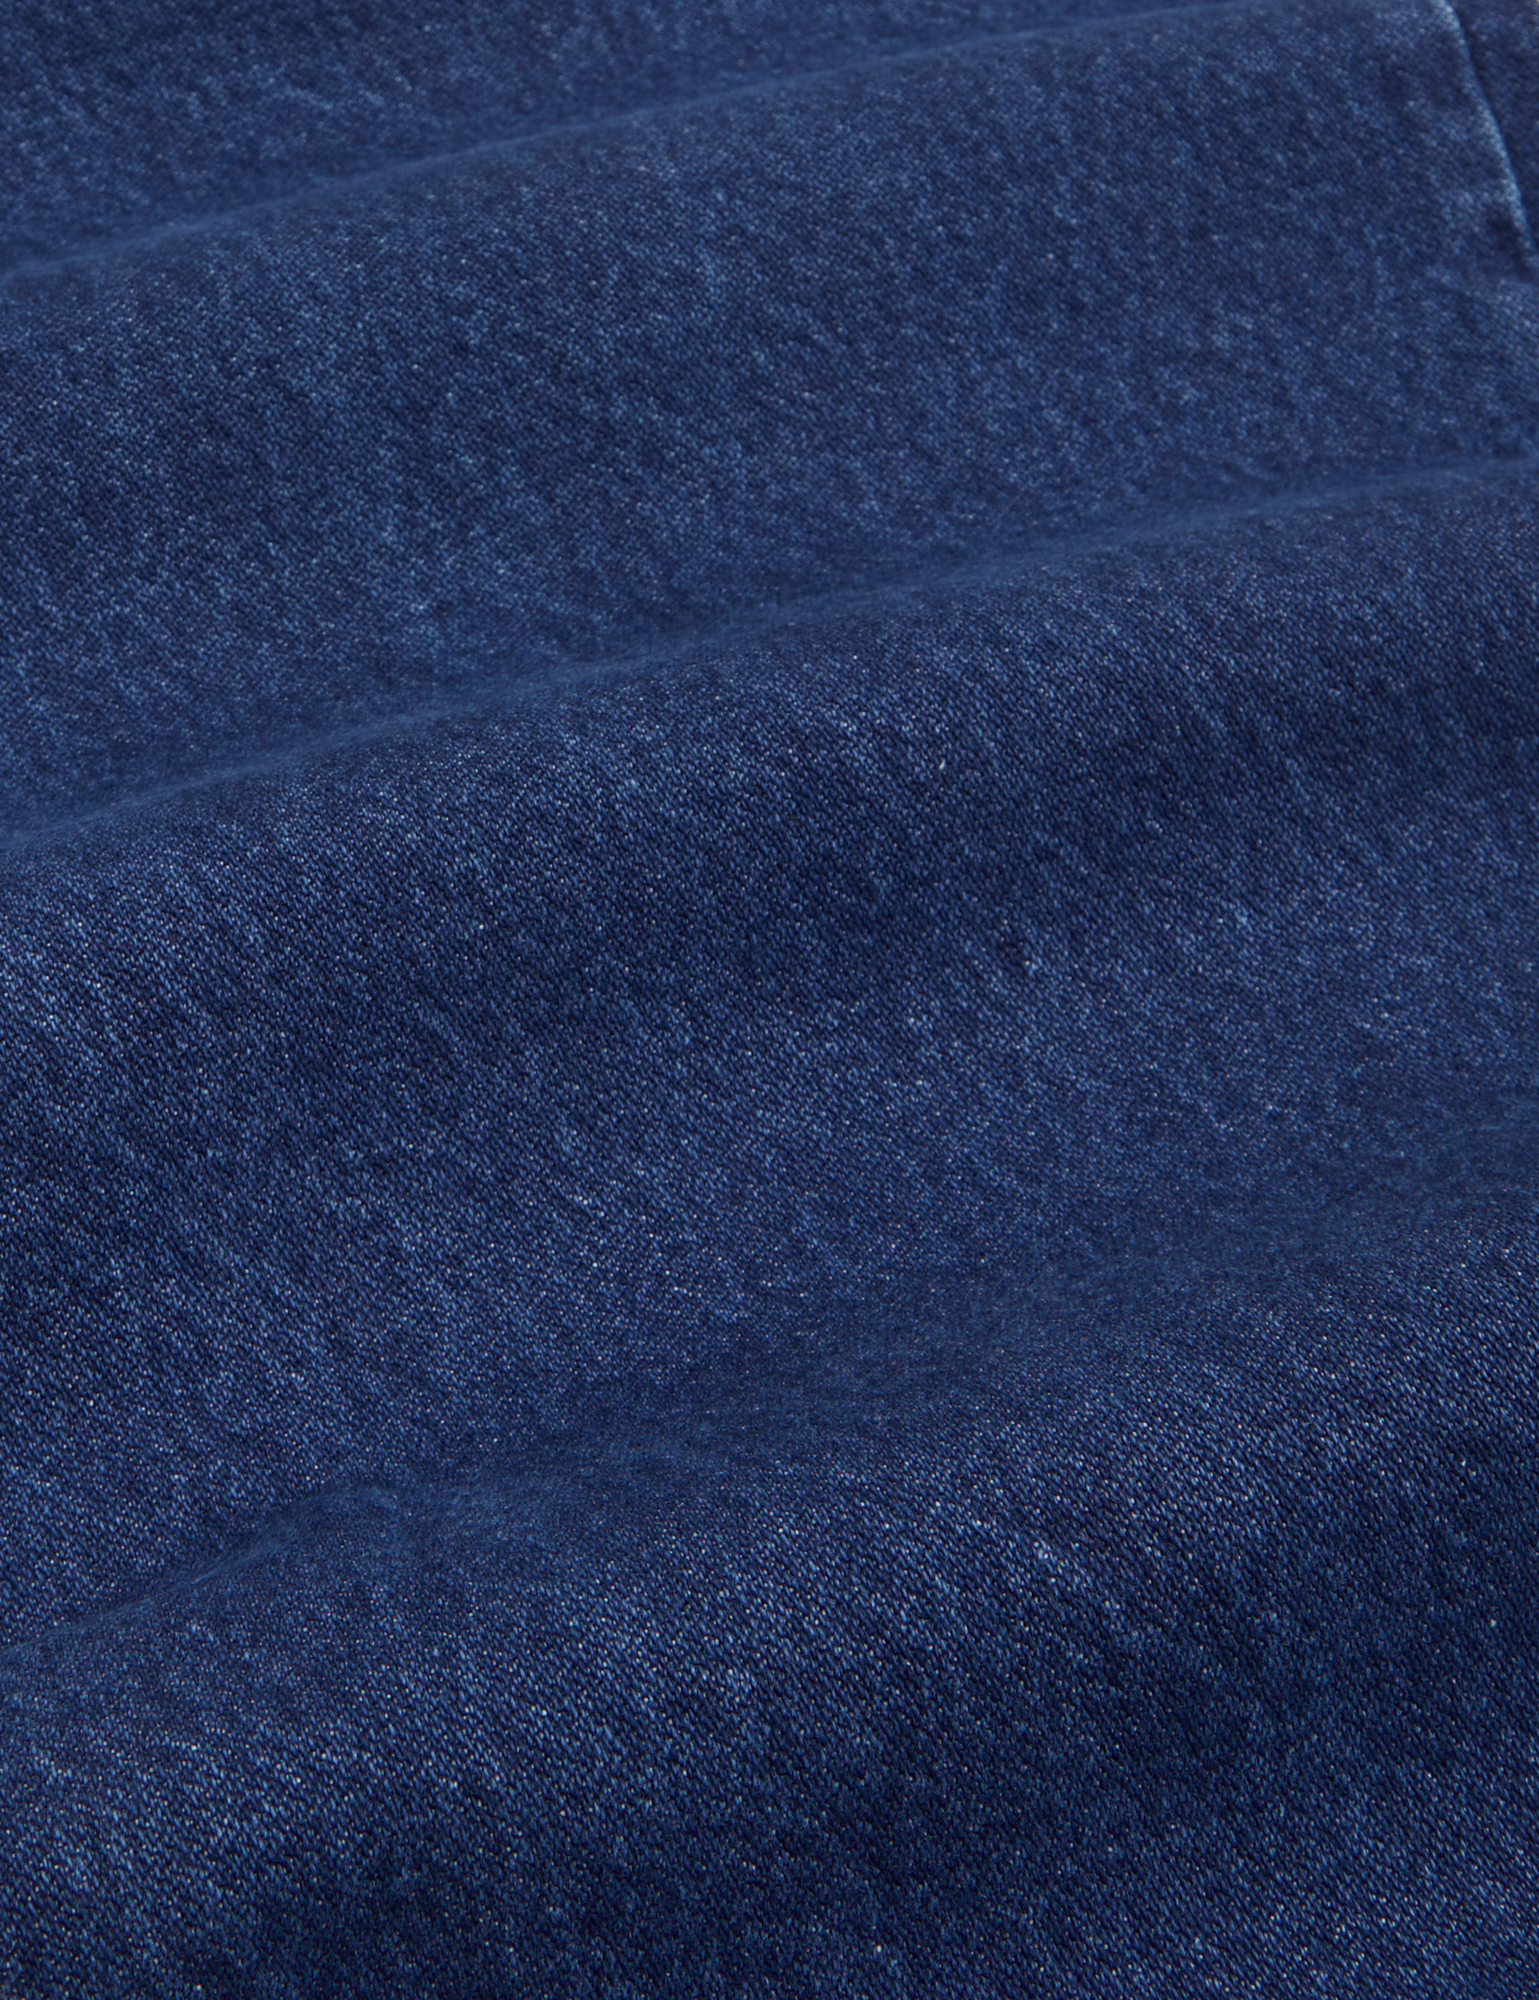 Denim Trouser Jeans in Dark Wash fabric detail close up